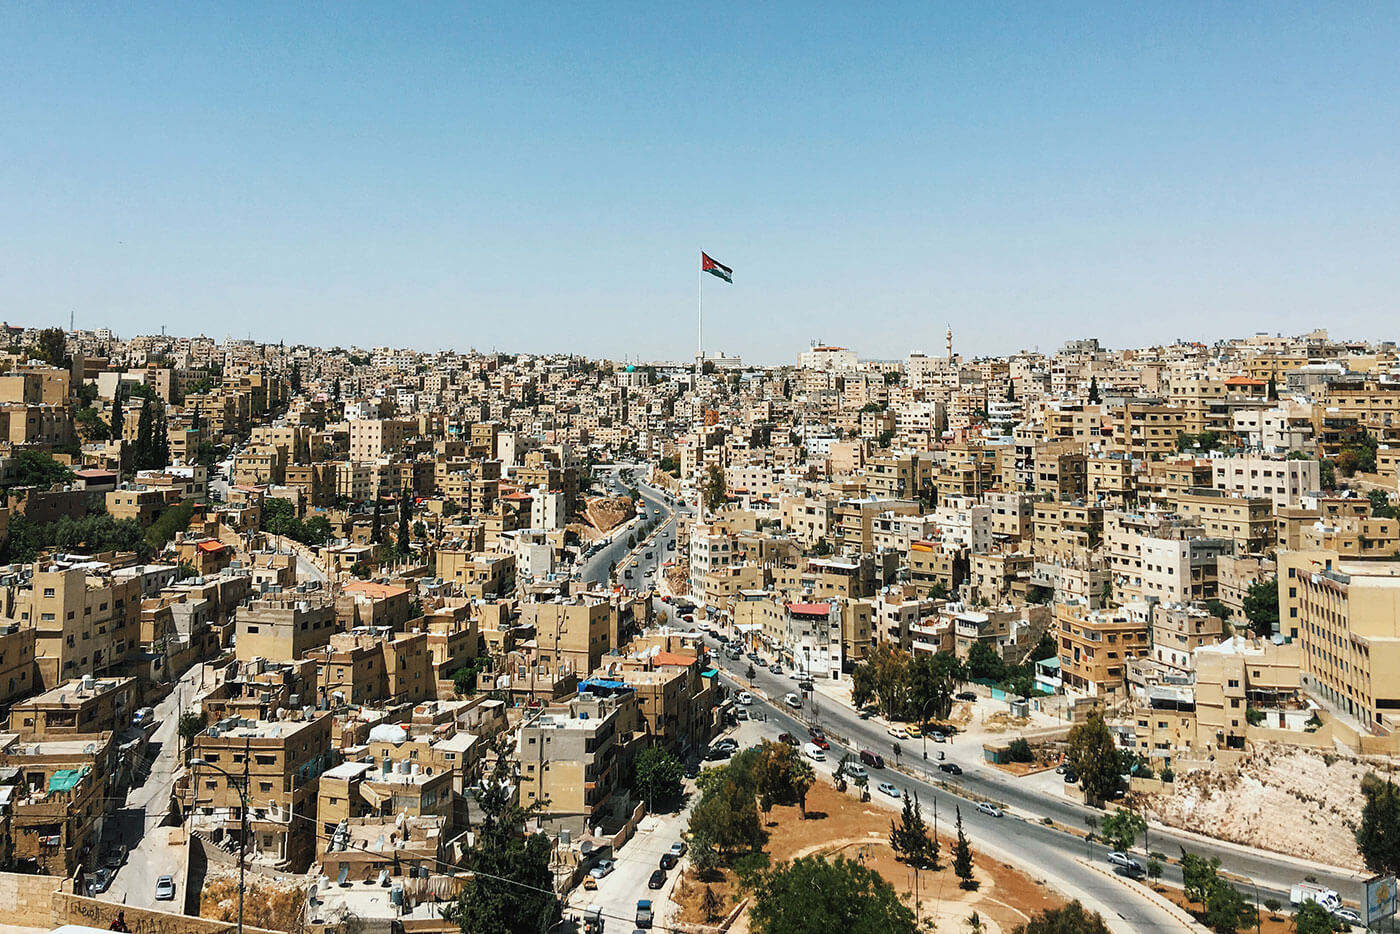 View from Amman Citadel